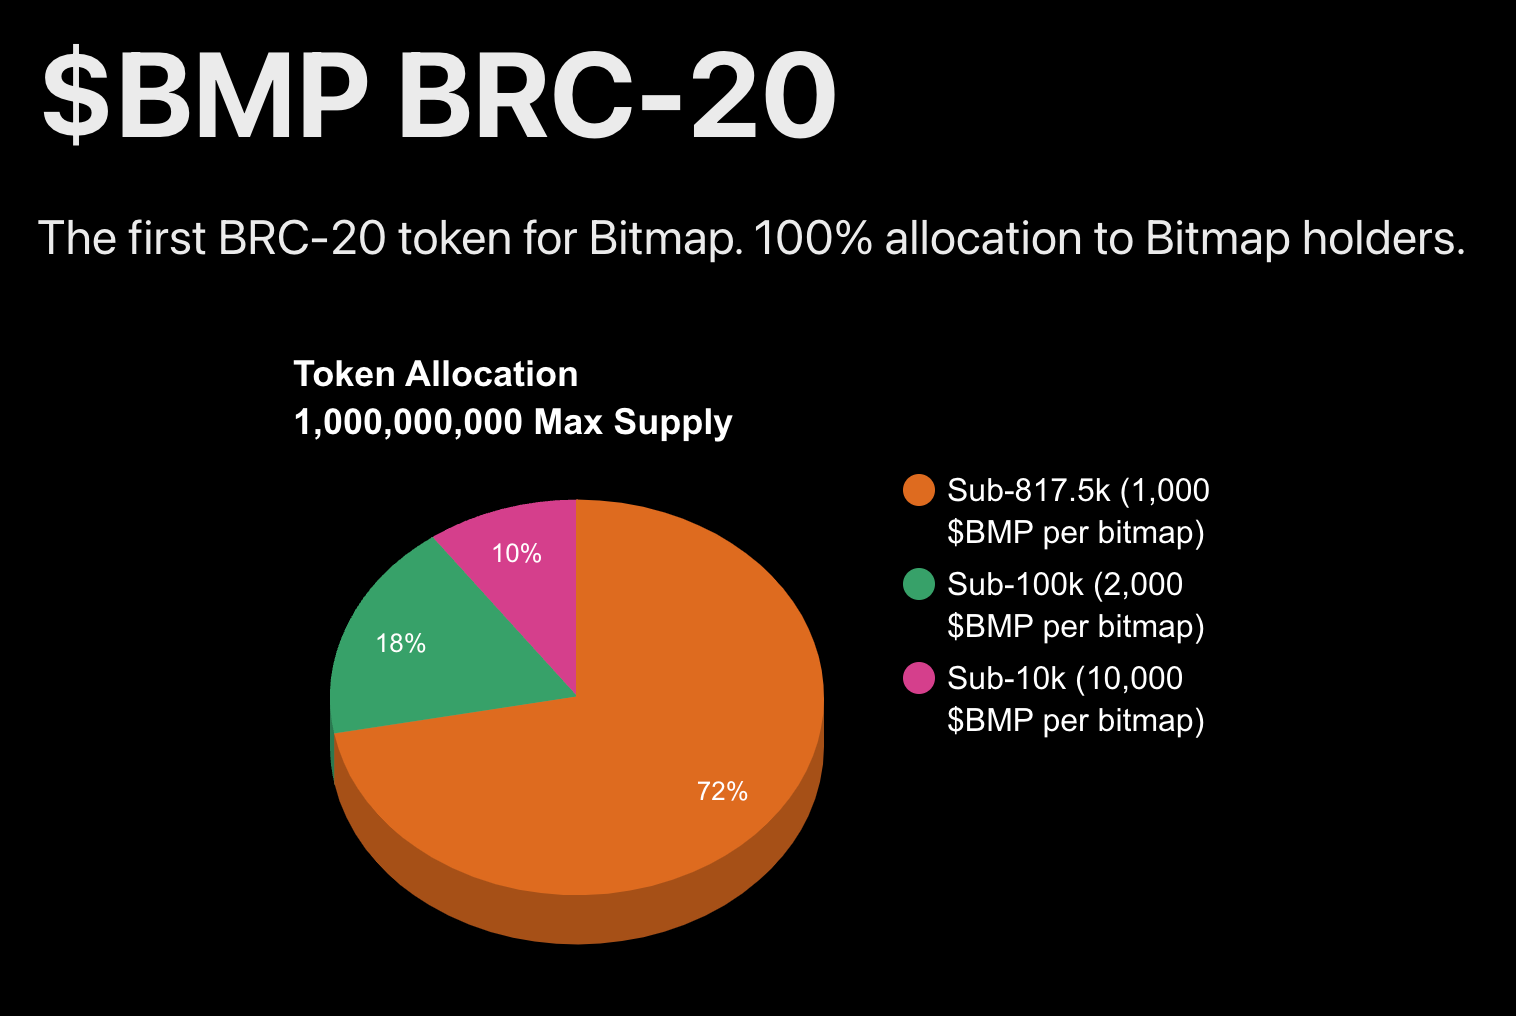 A Revisitation of Bitmap's Unfolding After 6 Months